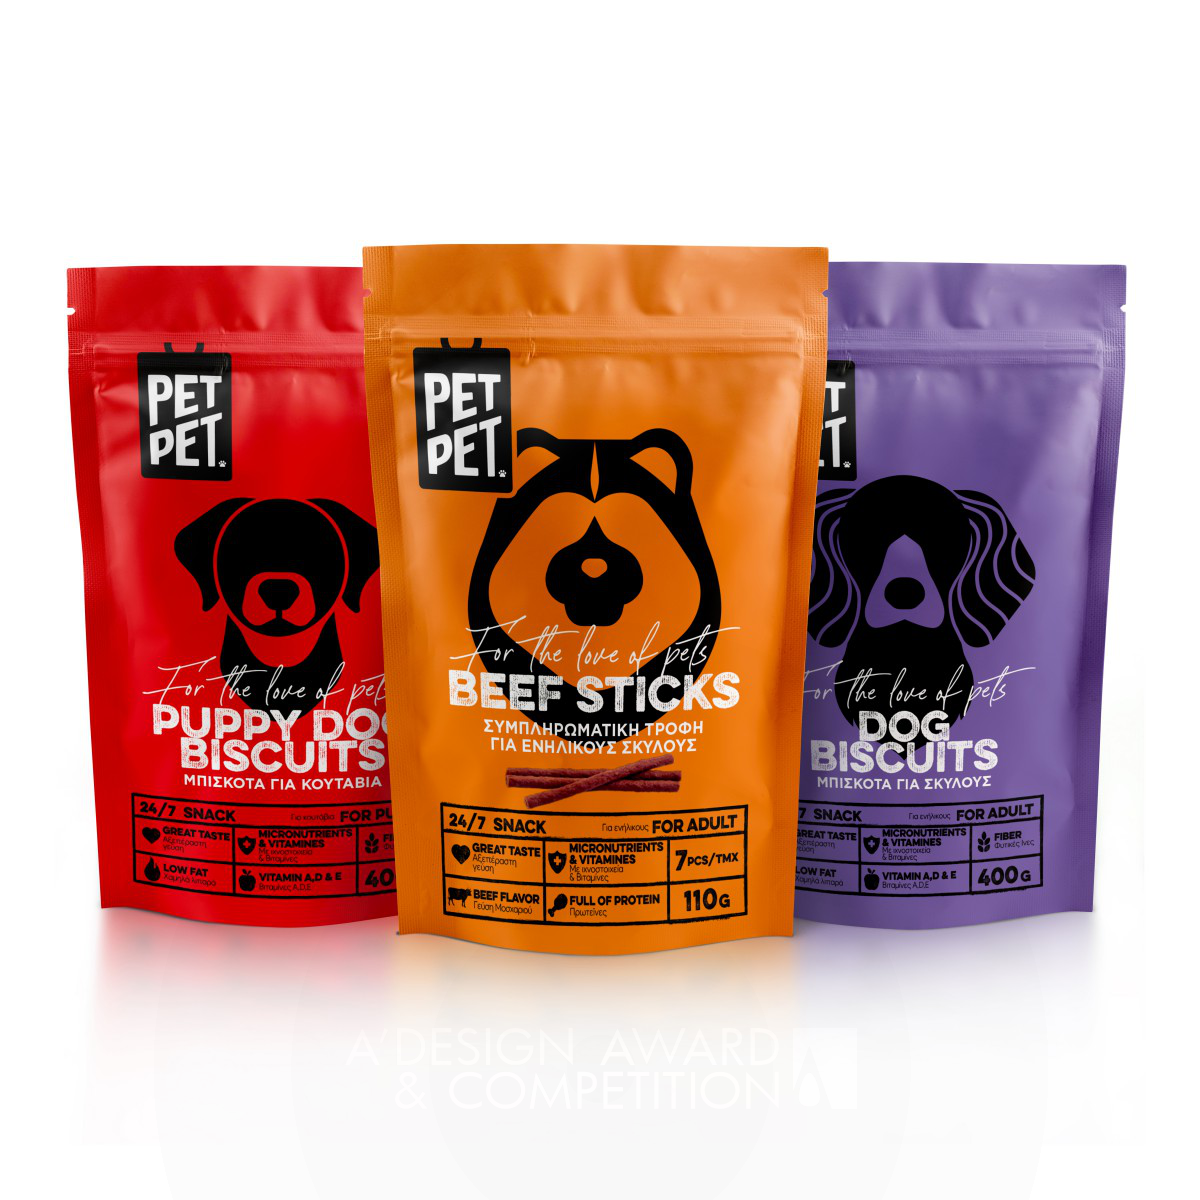 Pet Pet <b>Brand Products